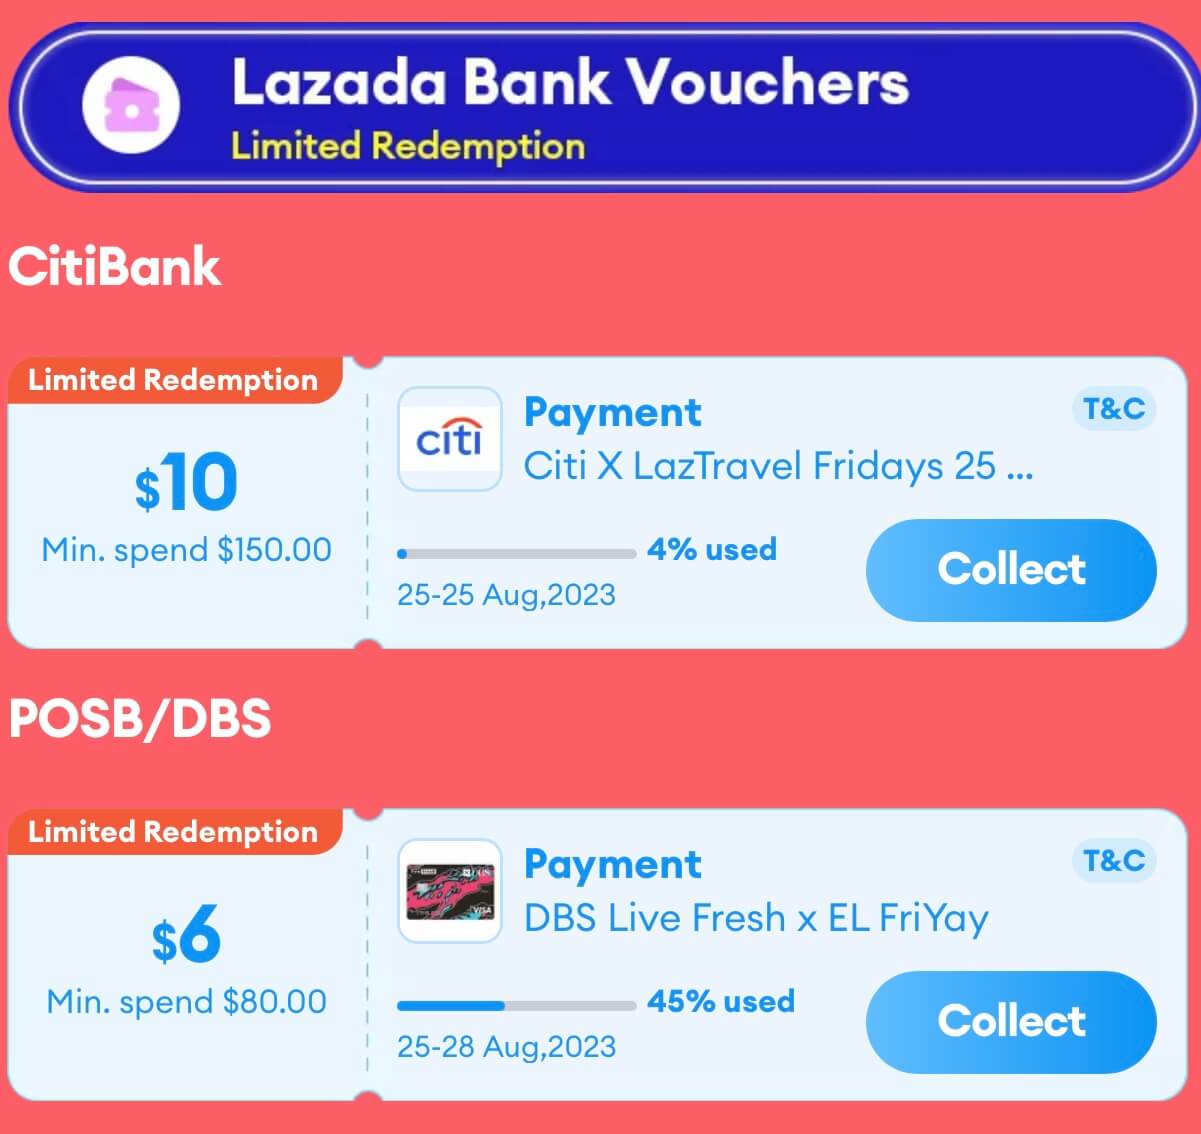 Lazada bank vouchers